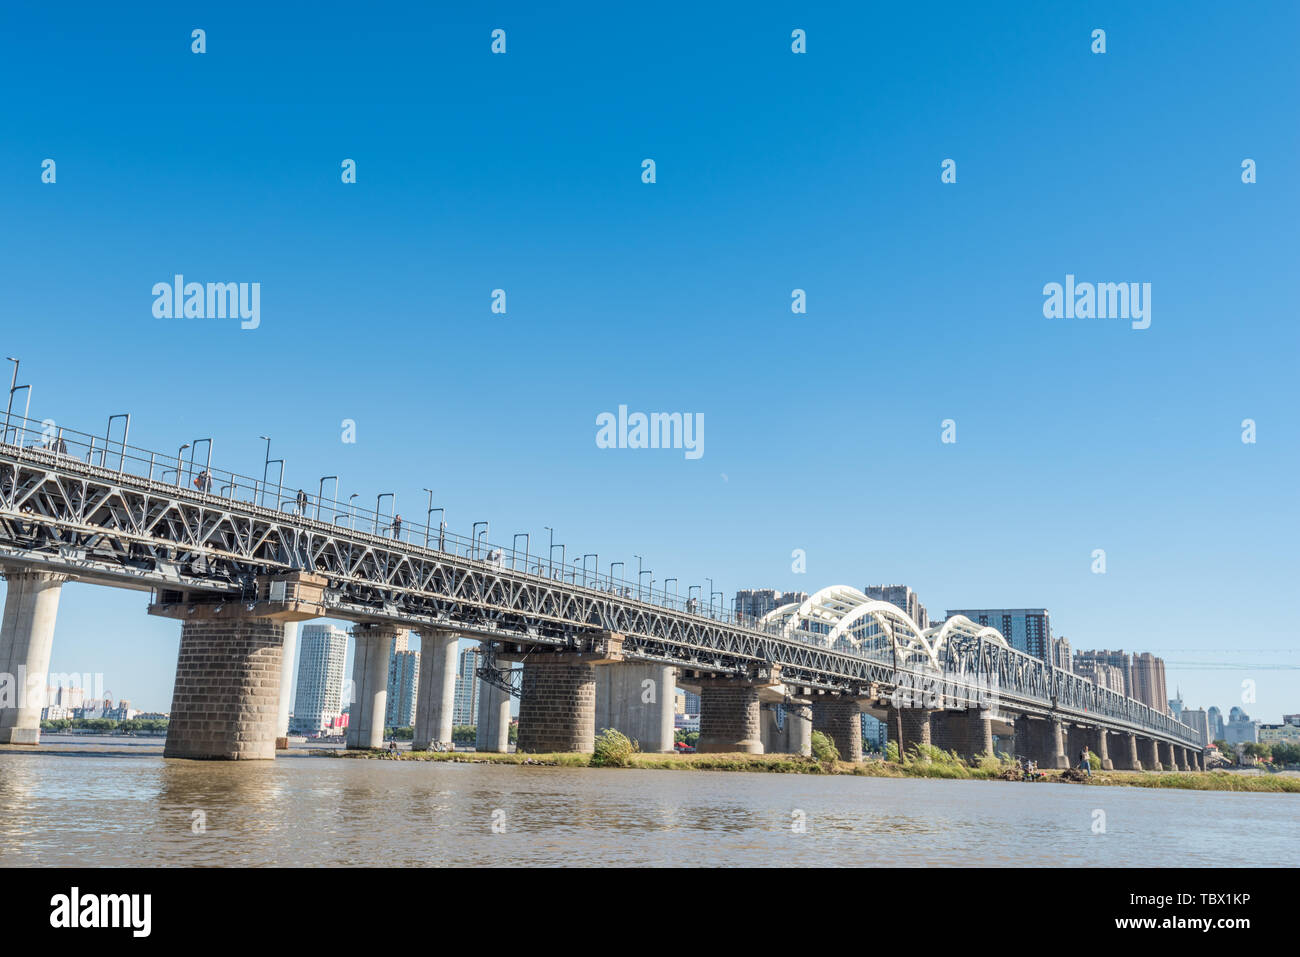 Songhua River Railway Bridge under Autumn Sunny Day in Harbin, China Stock Photo